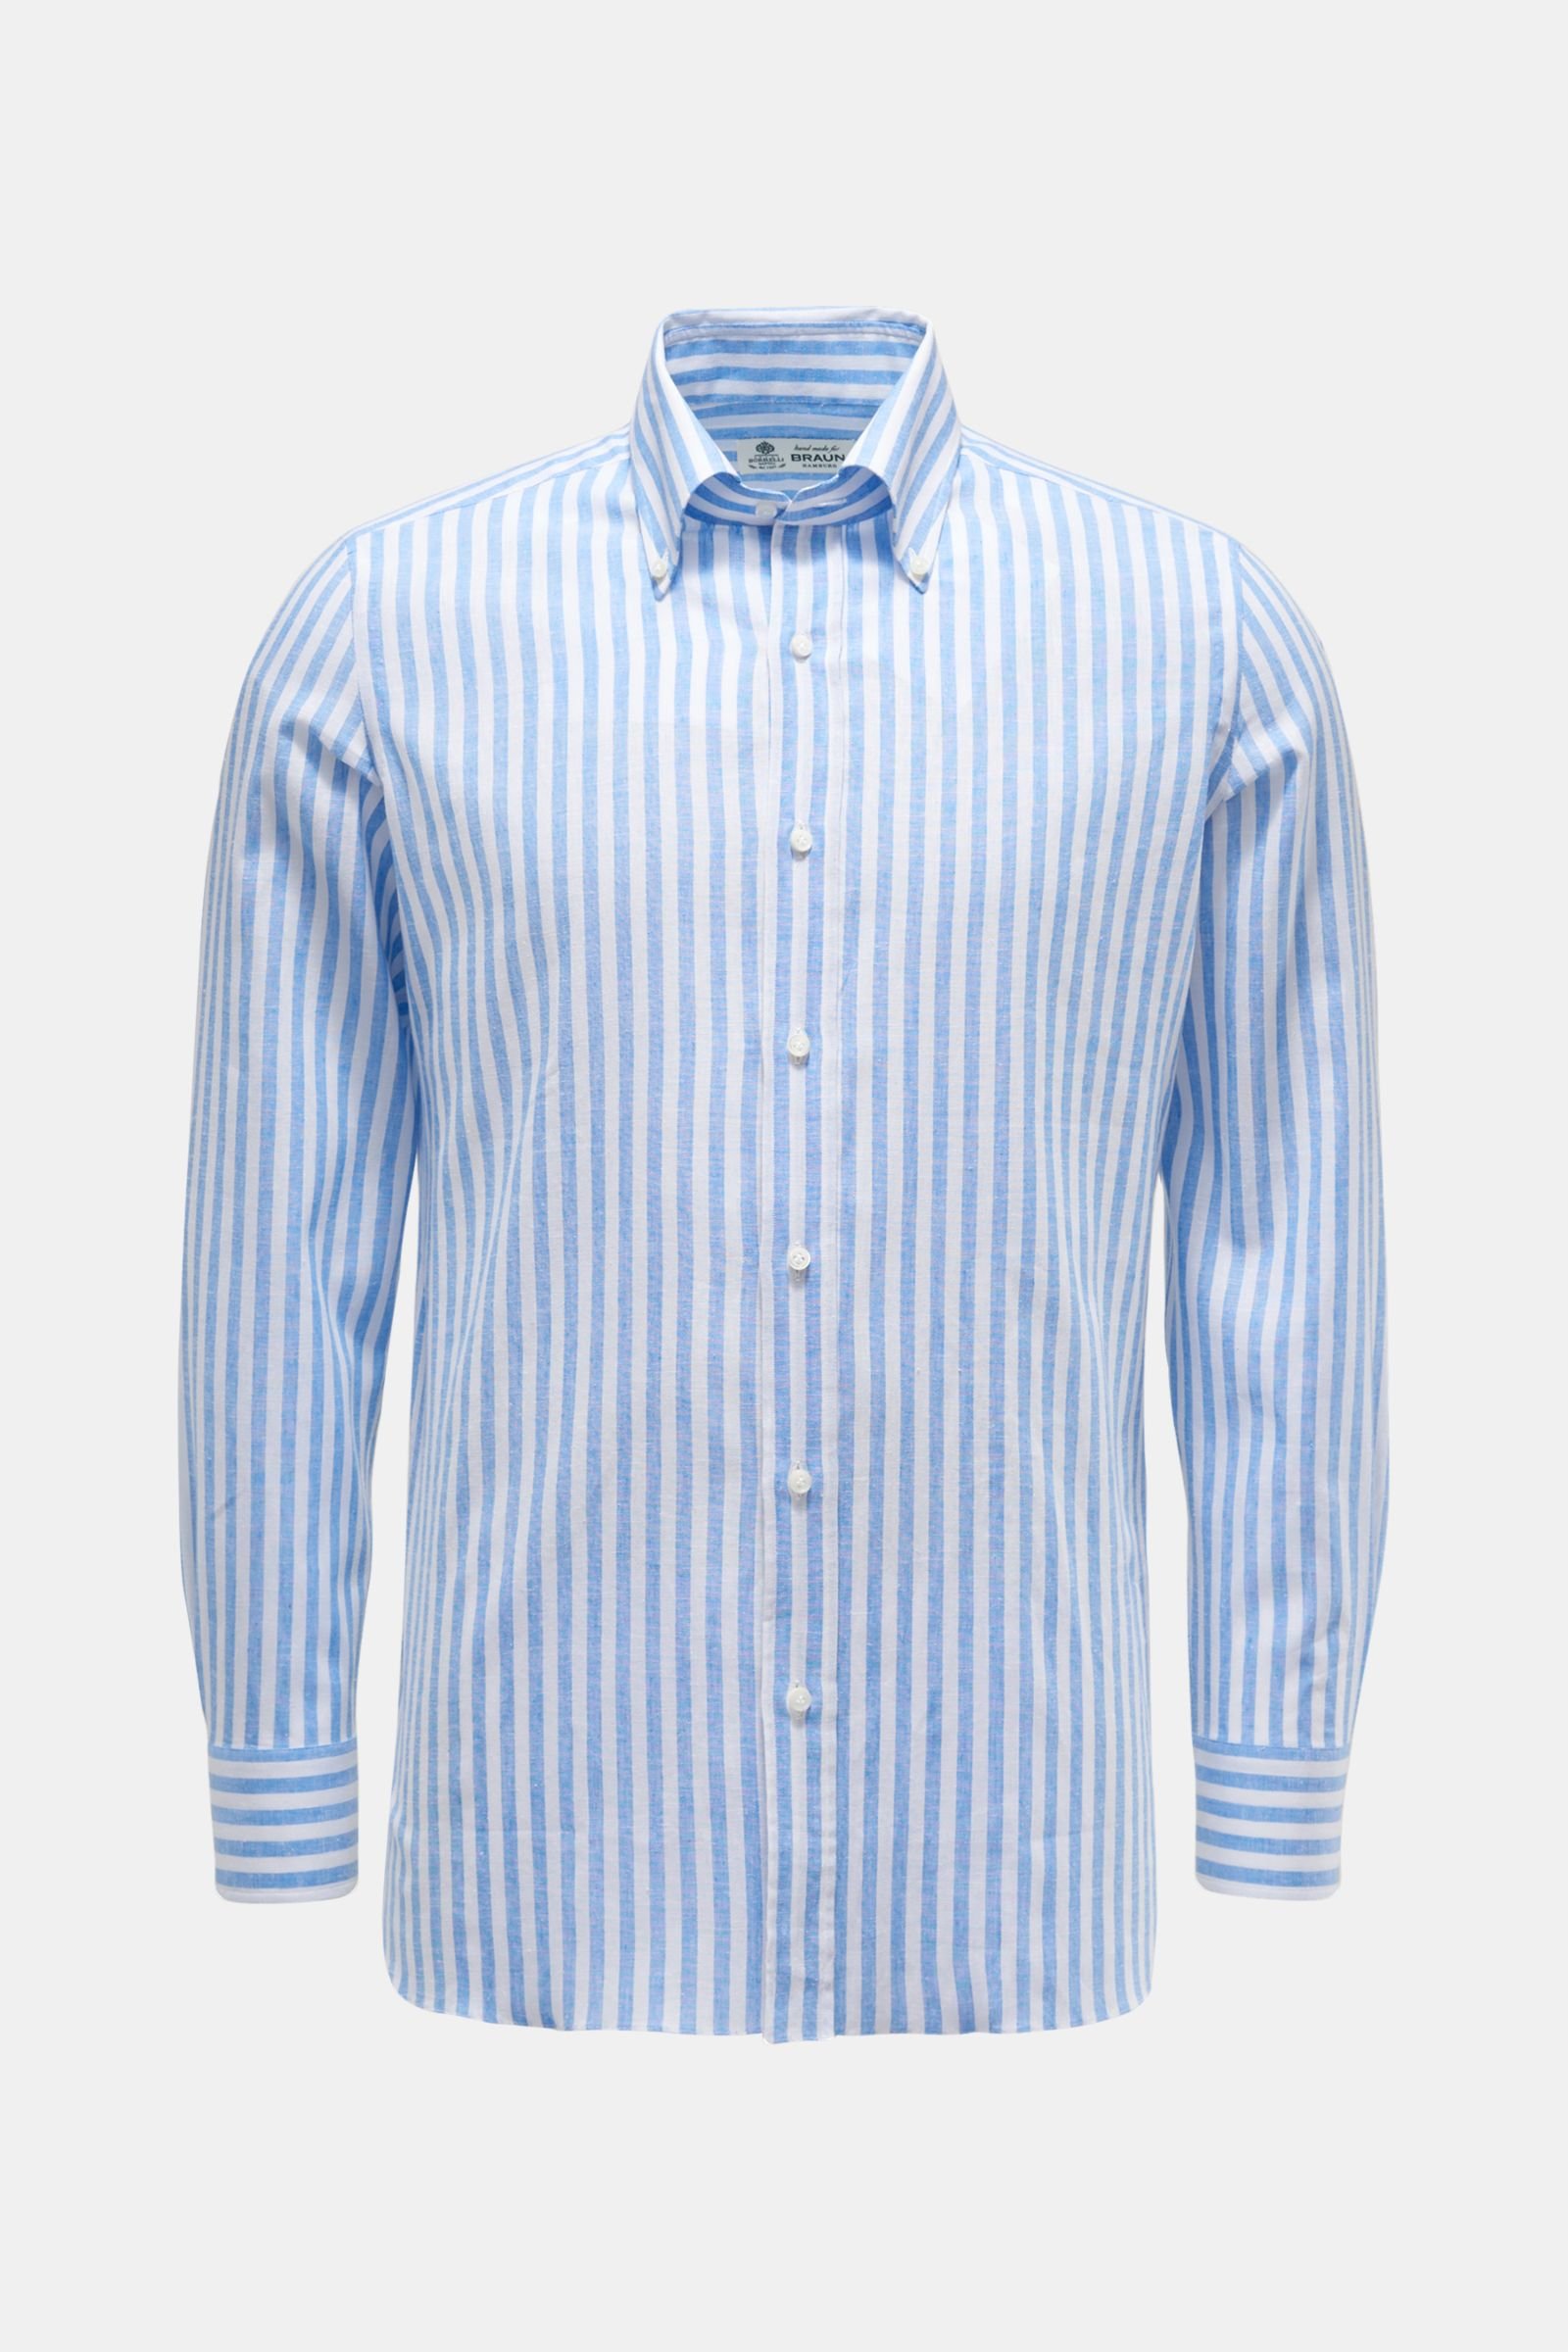 Casual shirt 'Gable' button-down collar light blue/white striped